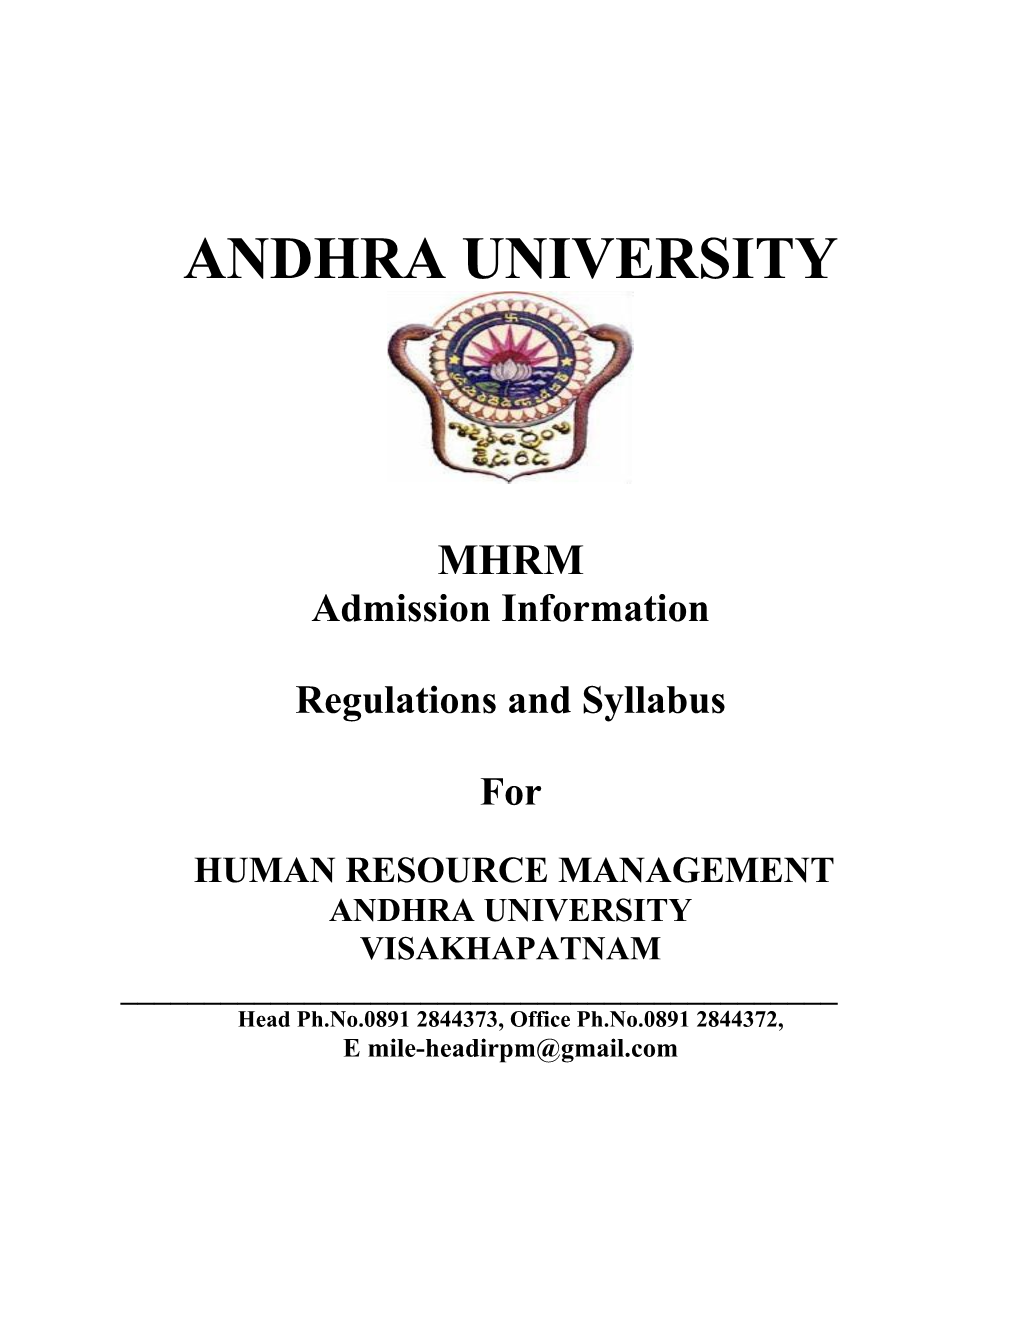 Andhra University